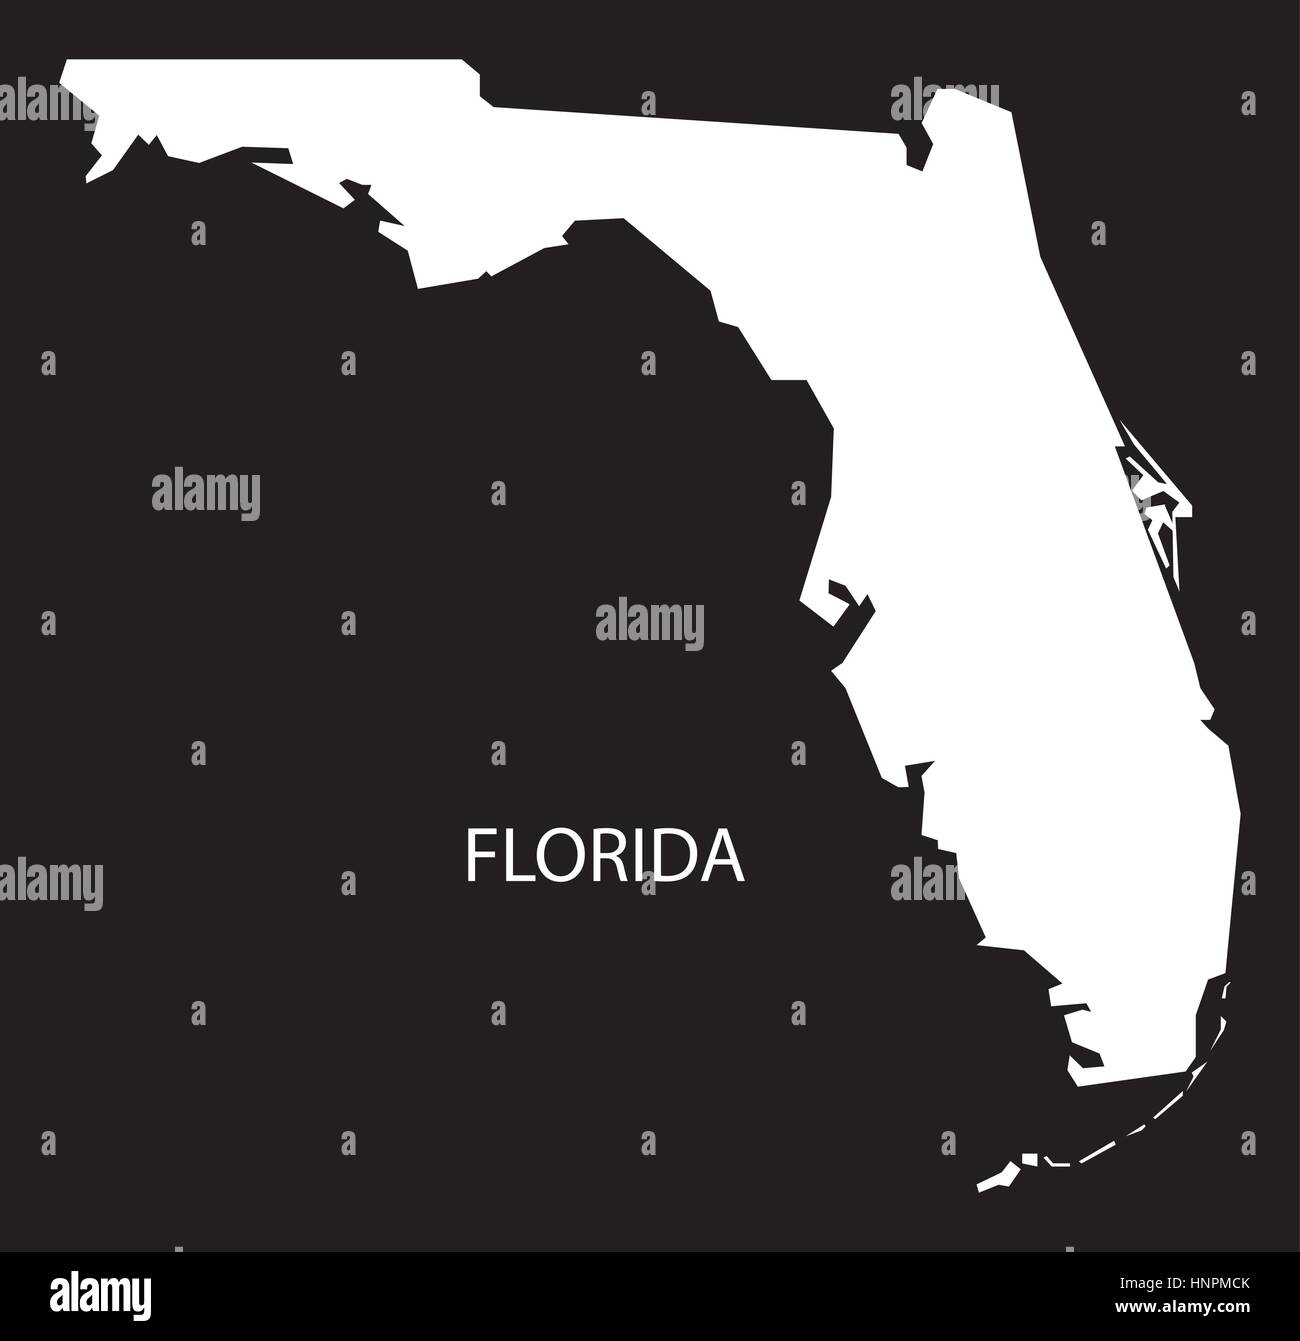 Florida-USA-Karte schwarz invertiert silhouette Stock Vektor